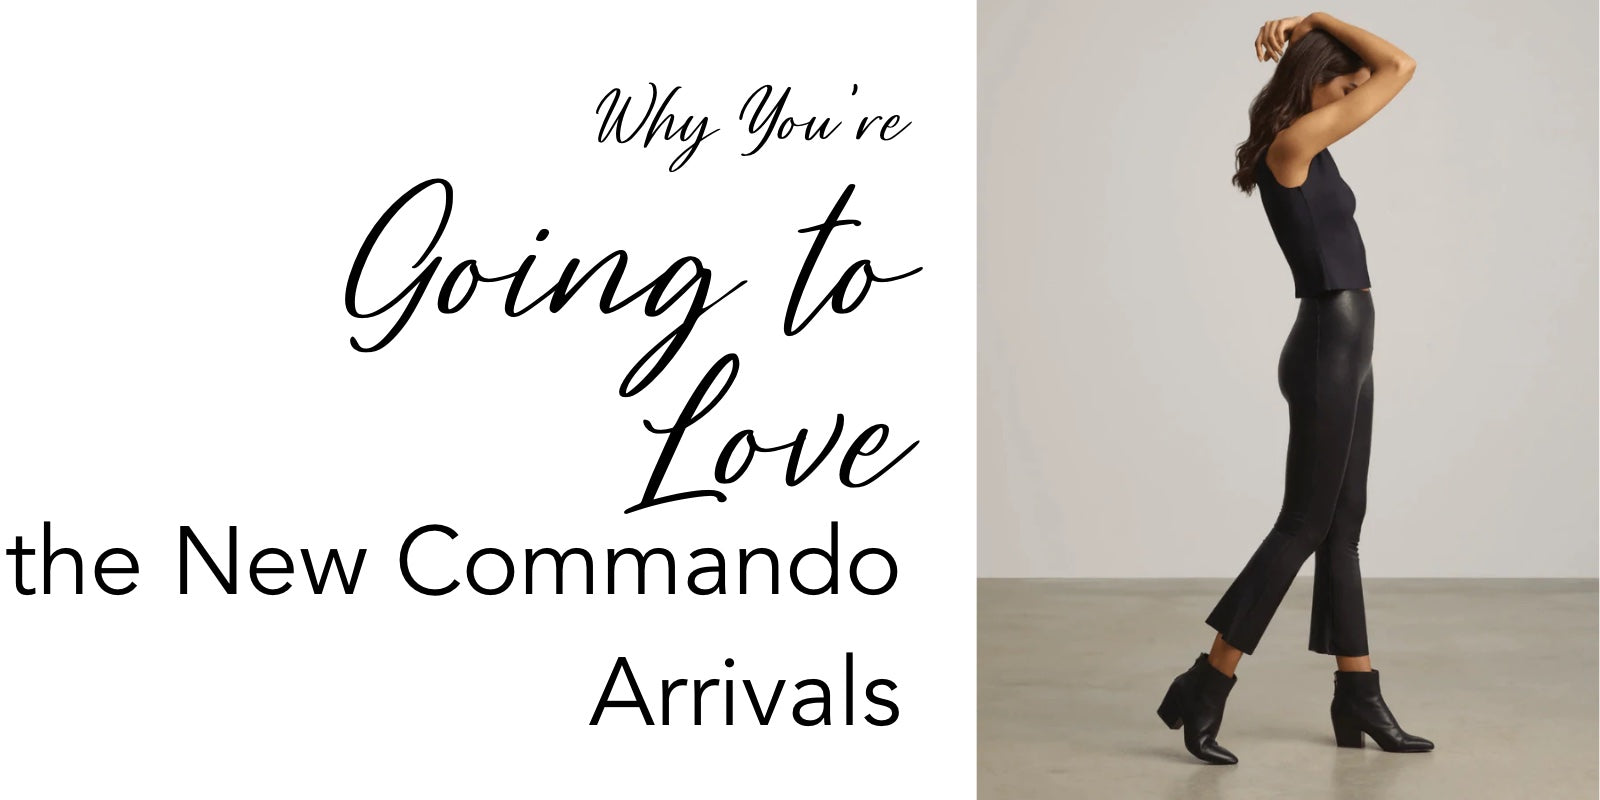 Love Legging? You'll Love the New Commando Arrivals